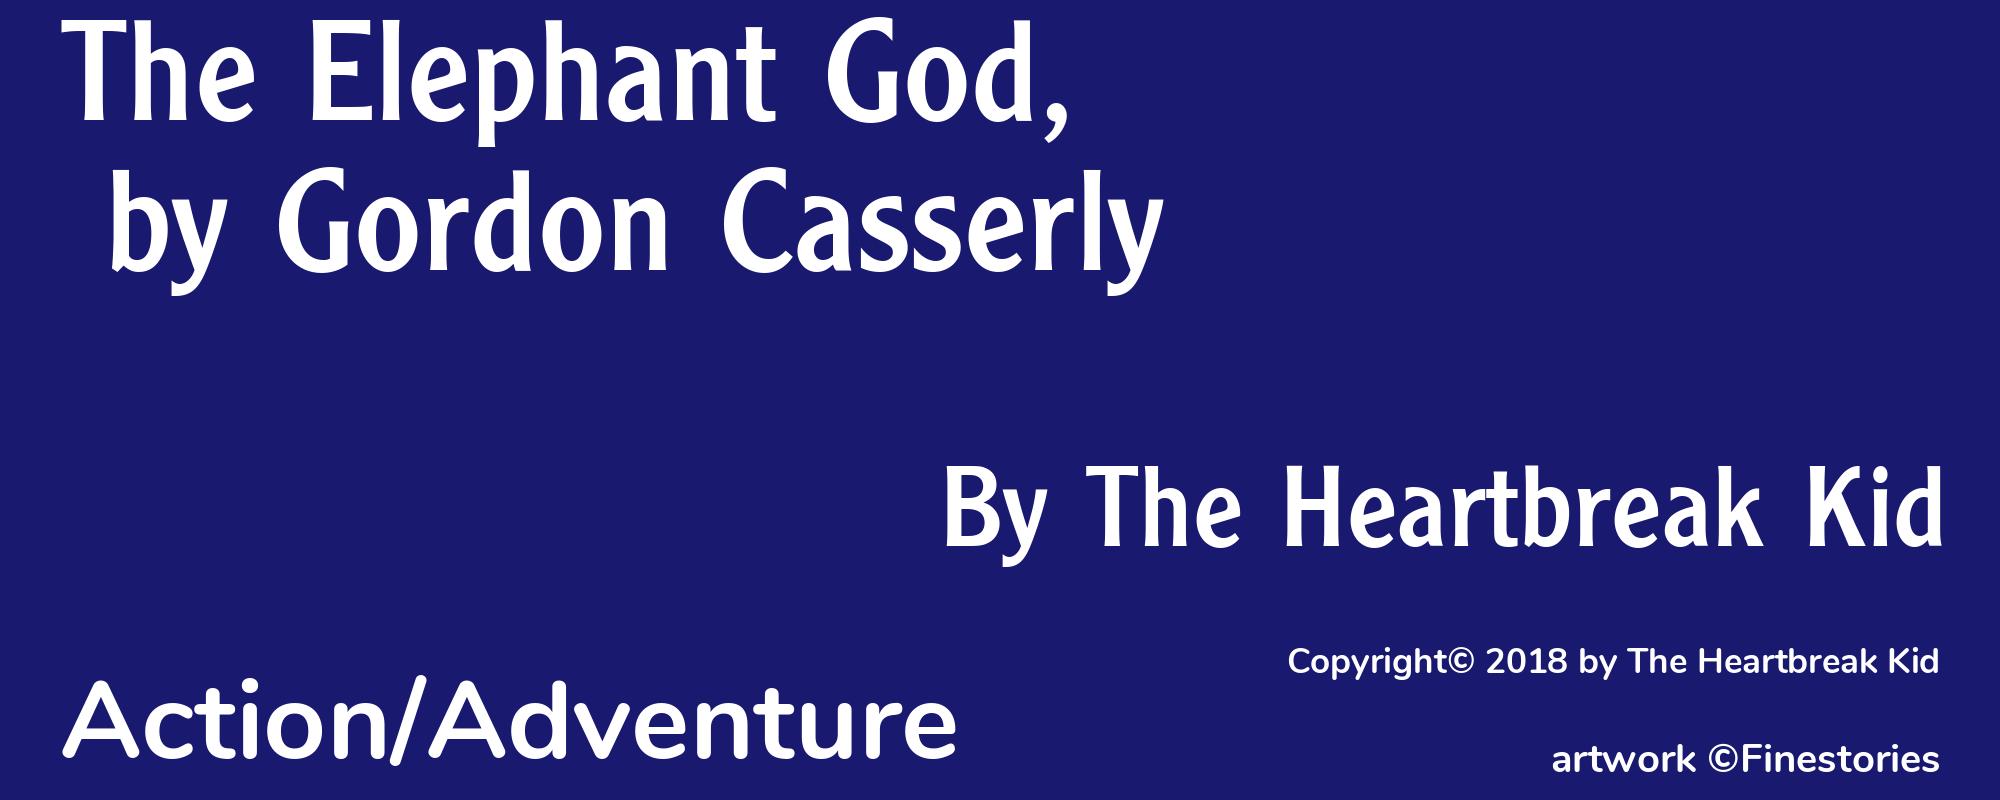 The Elephant God, by Gordon Casserly - Cover